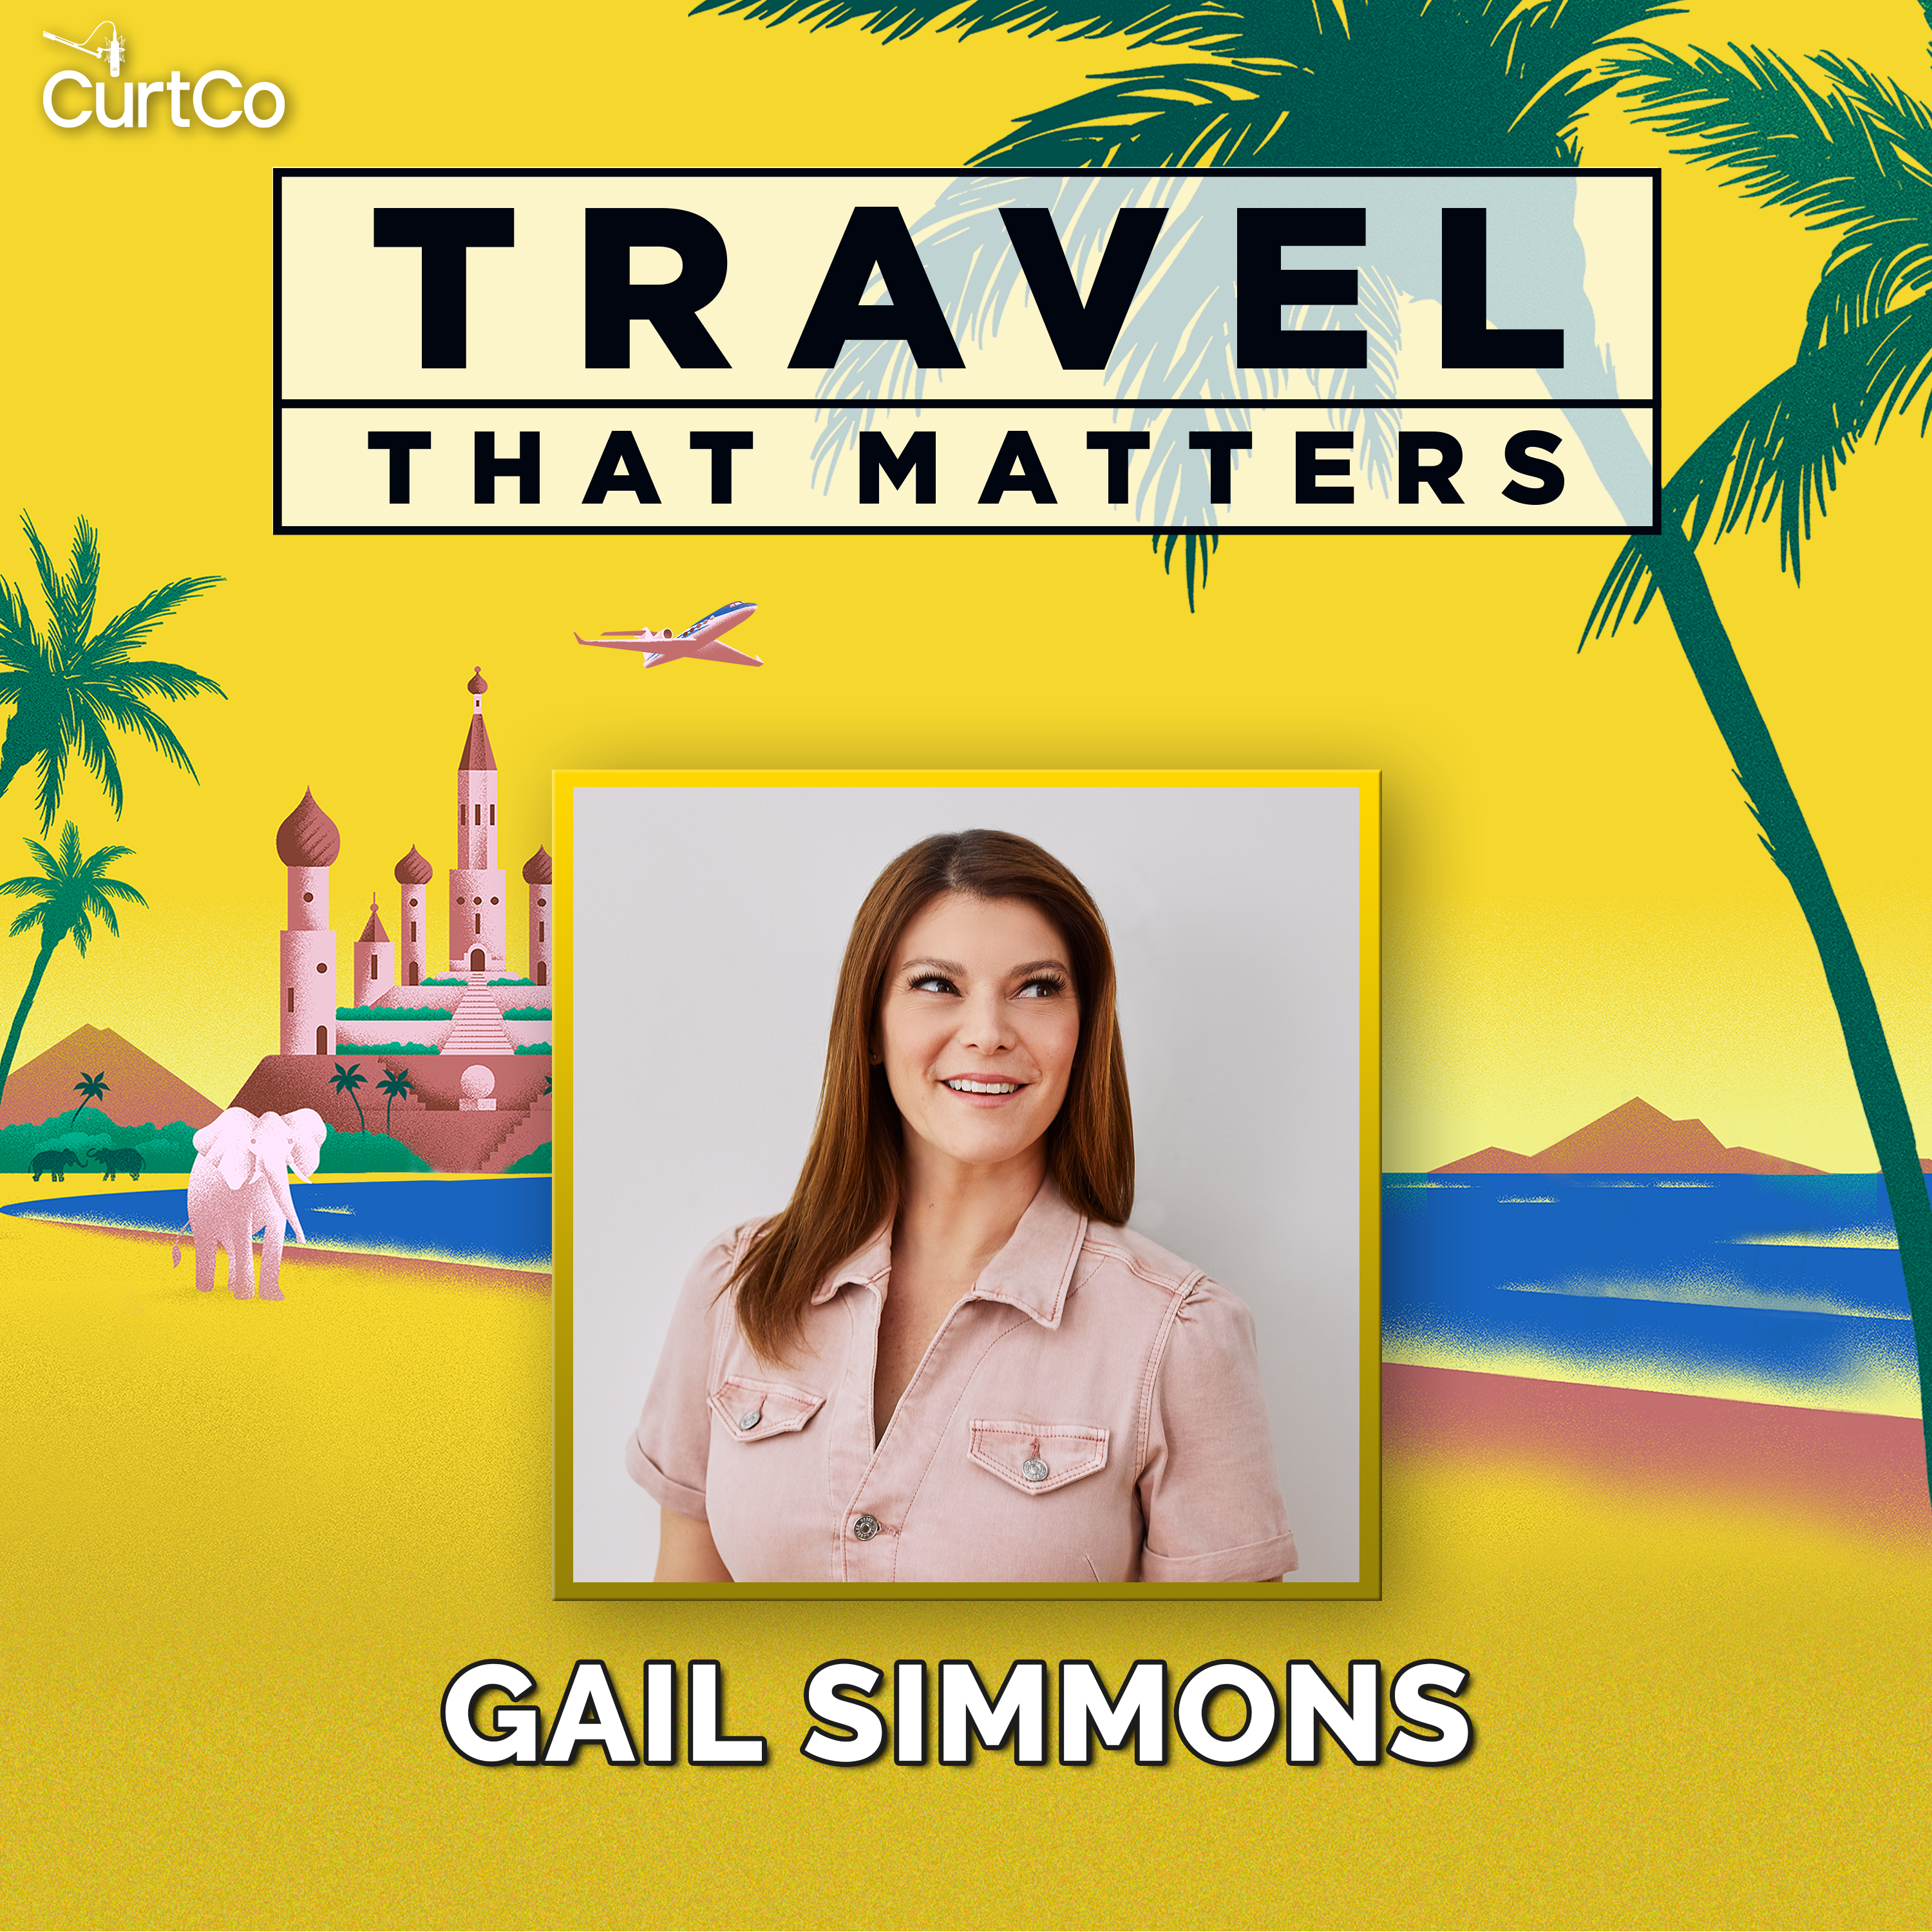 Gail Simmons (Bravo’s Top Chef Judge): Kibbutz in Israel, Neighborhood Spot in Melbourne, Safaris in South Africa, Love of Japan